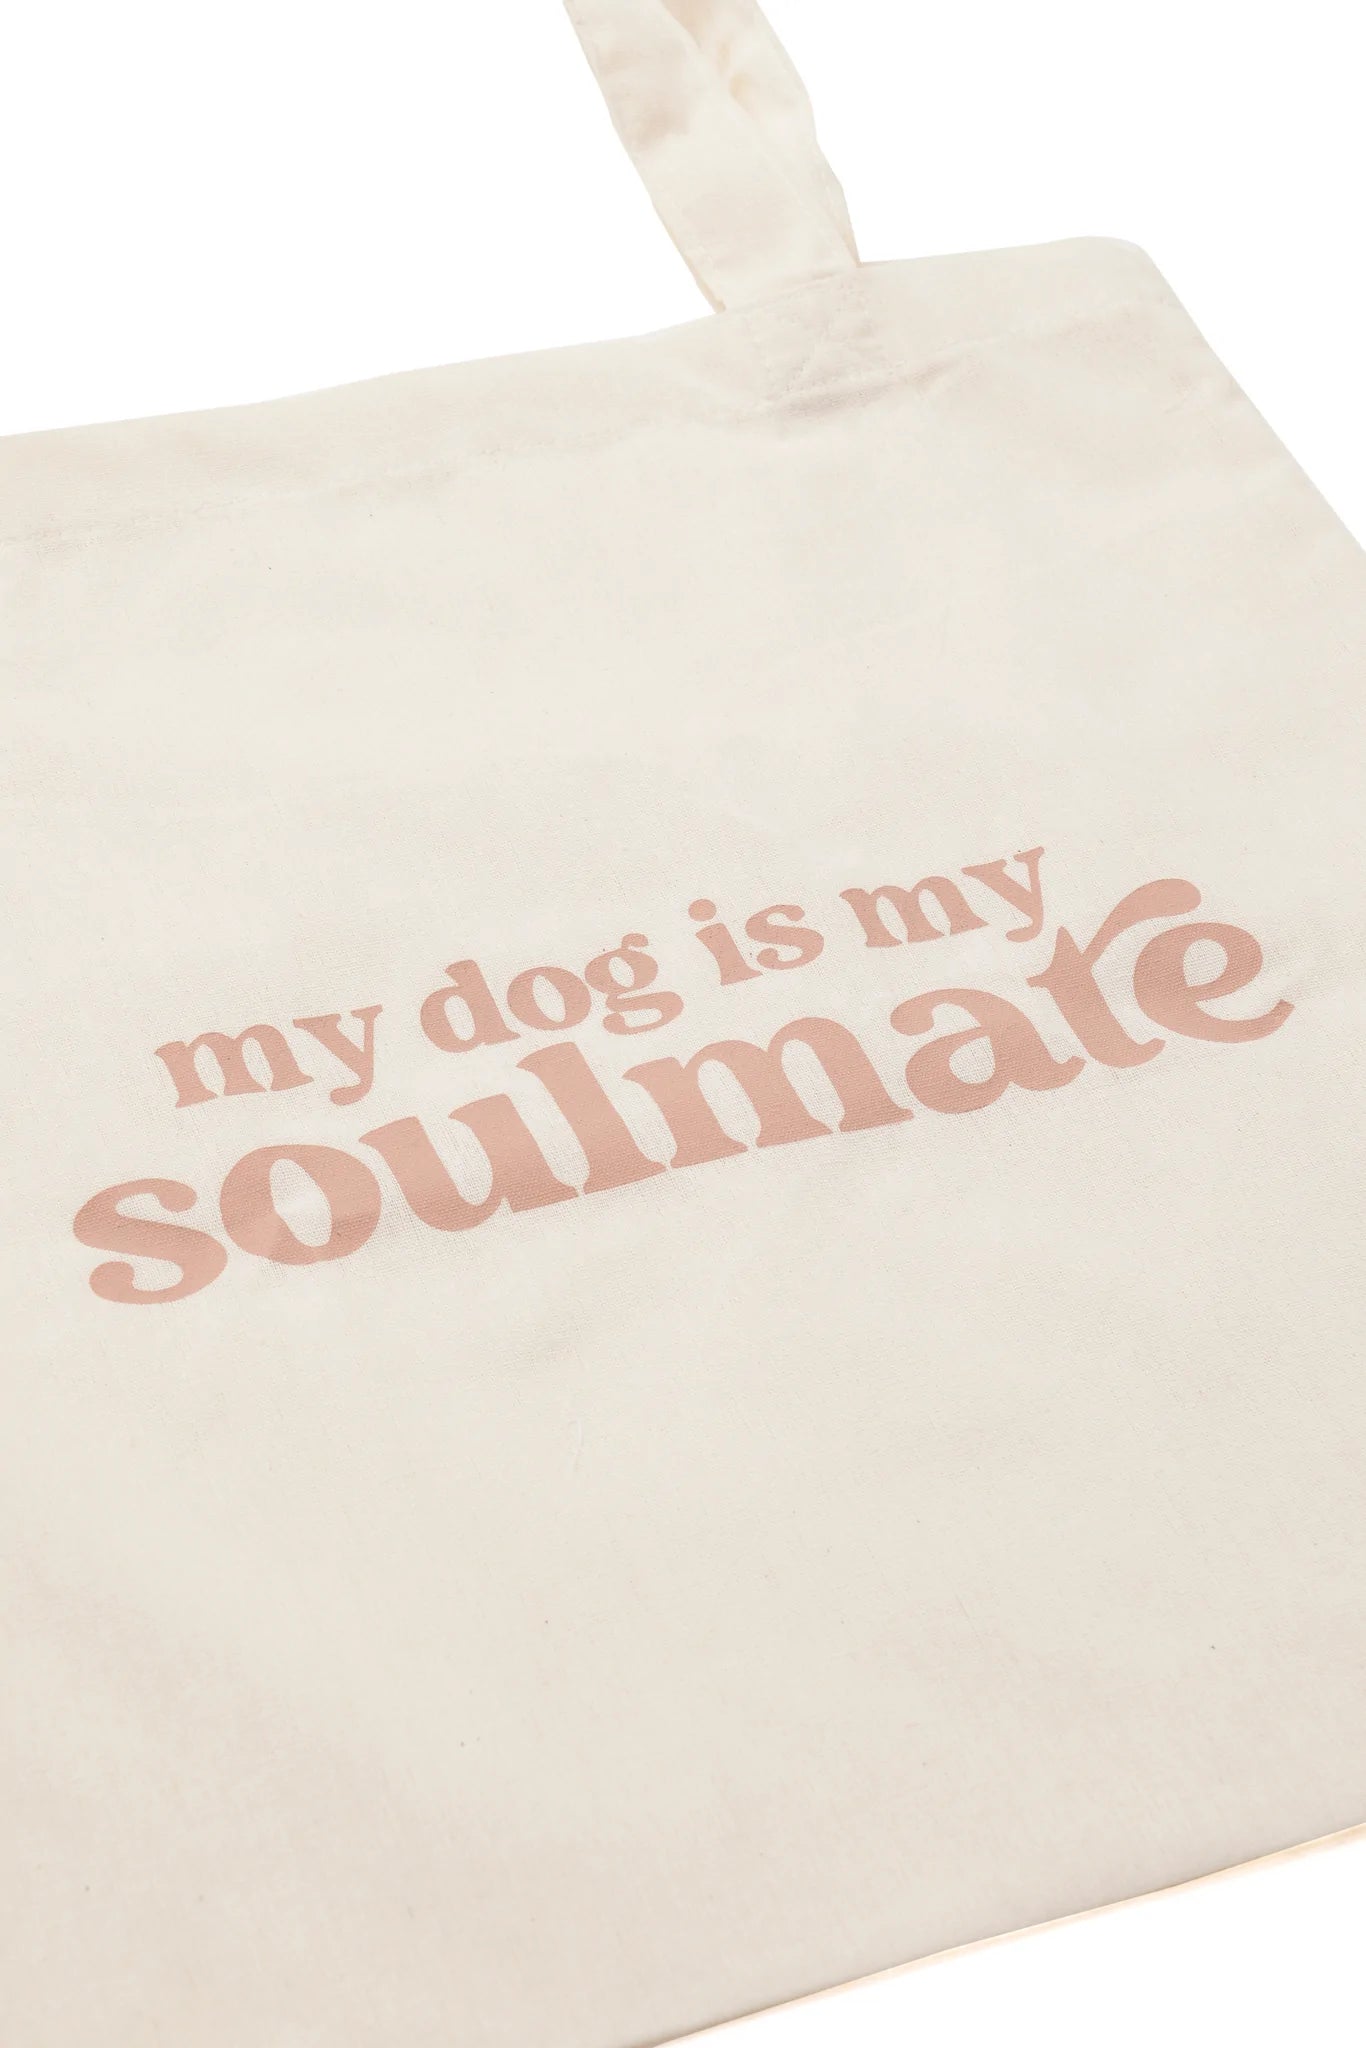 Tote bag "MY DOG IS MY SOULMATE"